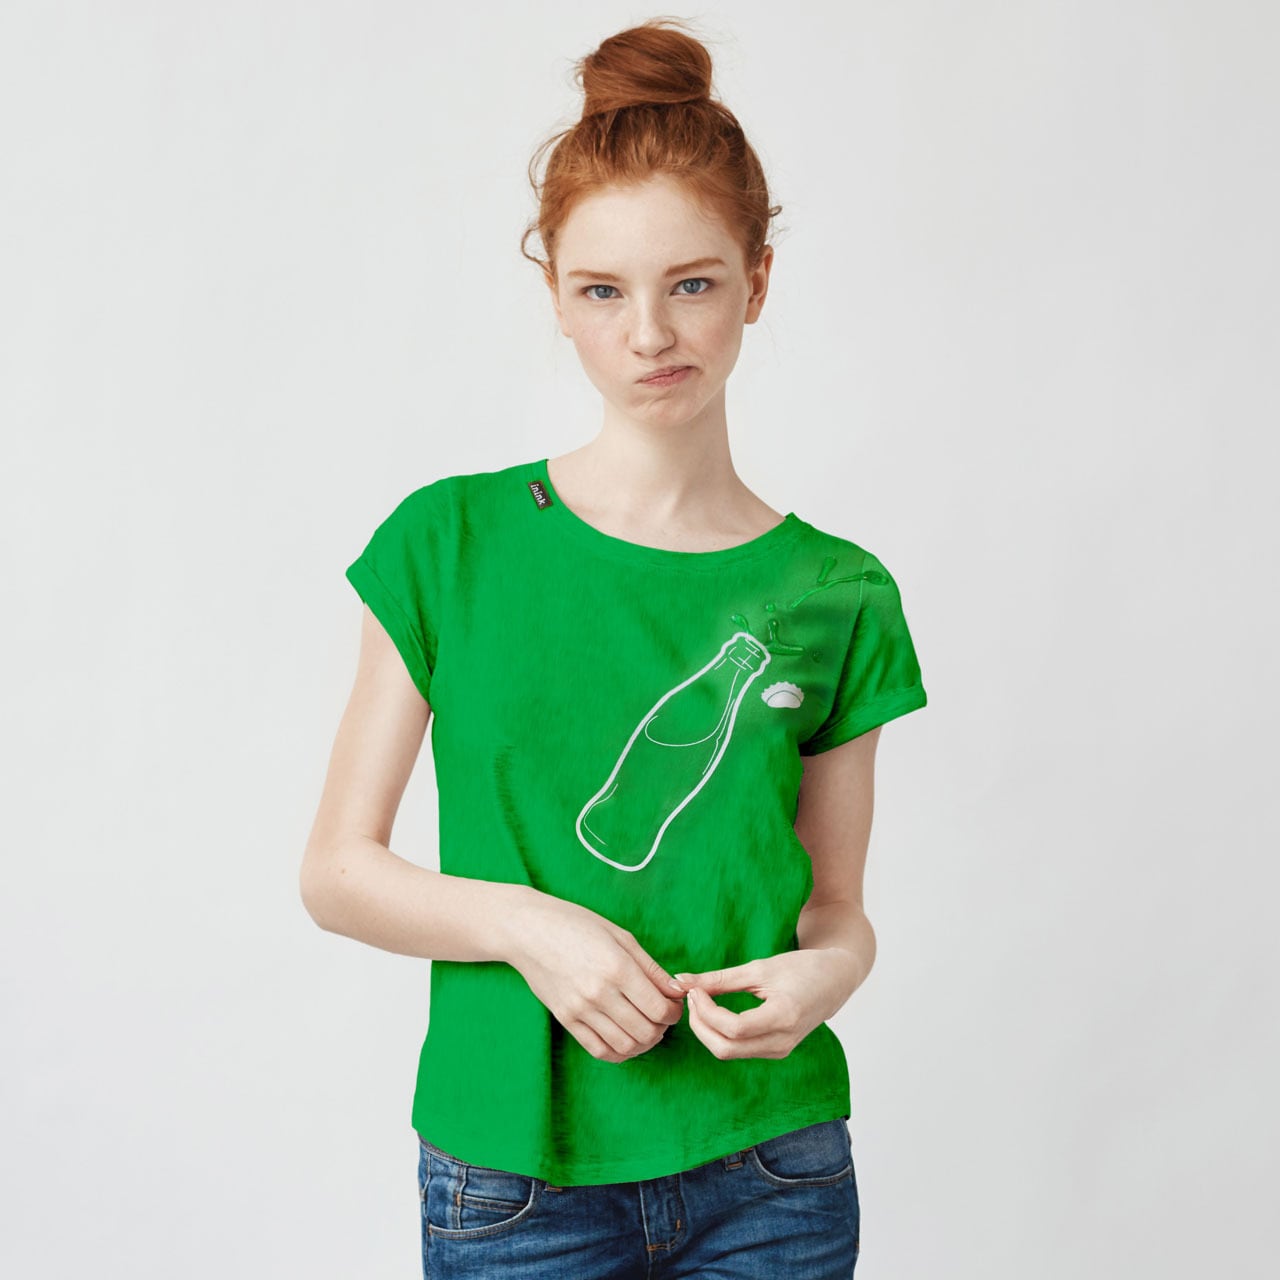 KIRIN Tシャツ グリーン 緑色 エコ リサイクル 非売品 新品